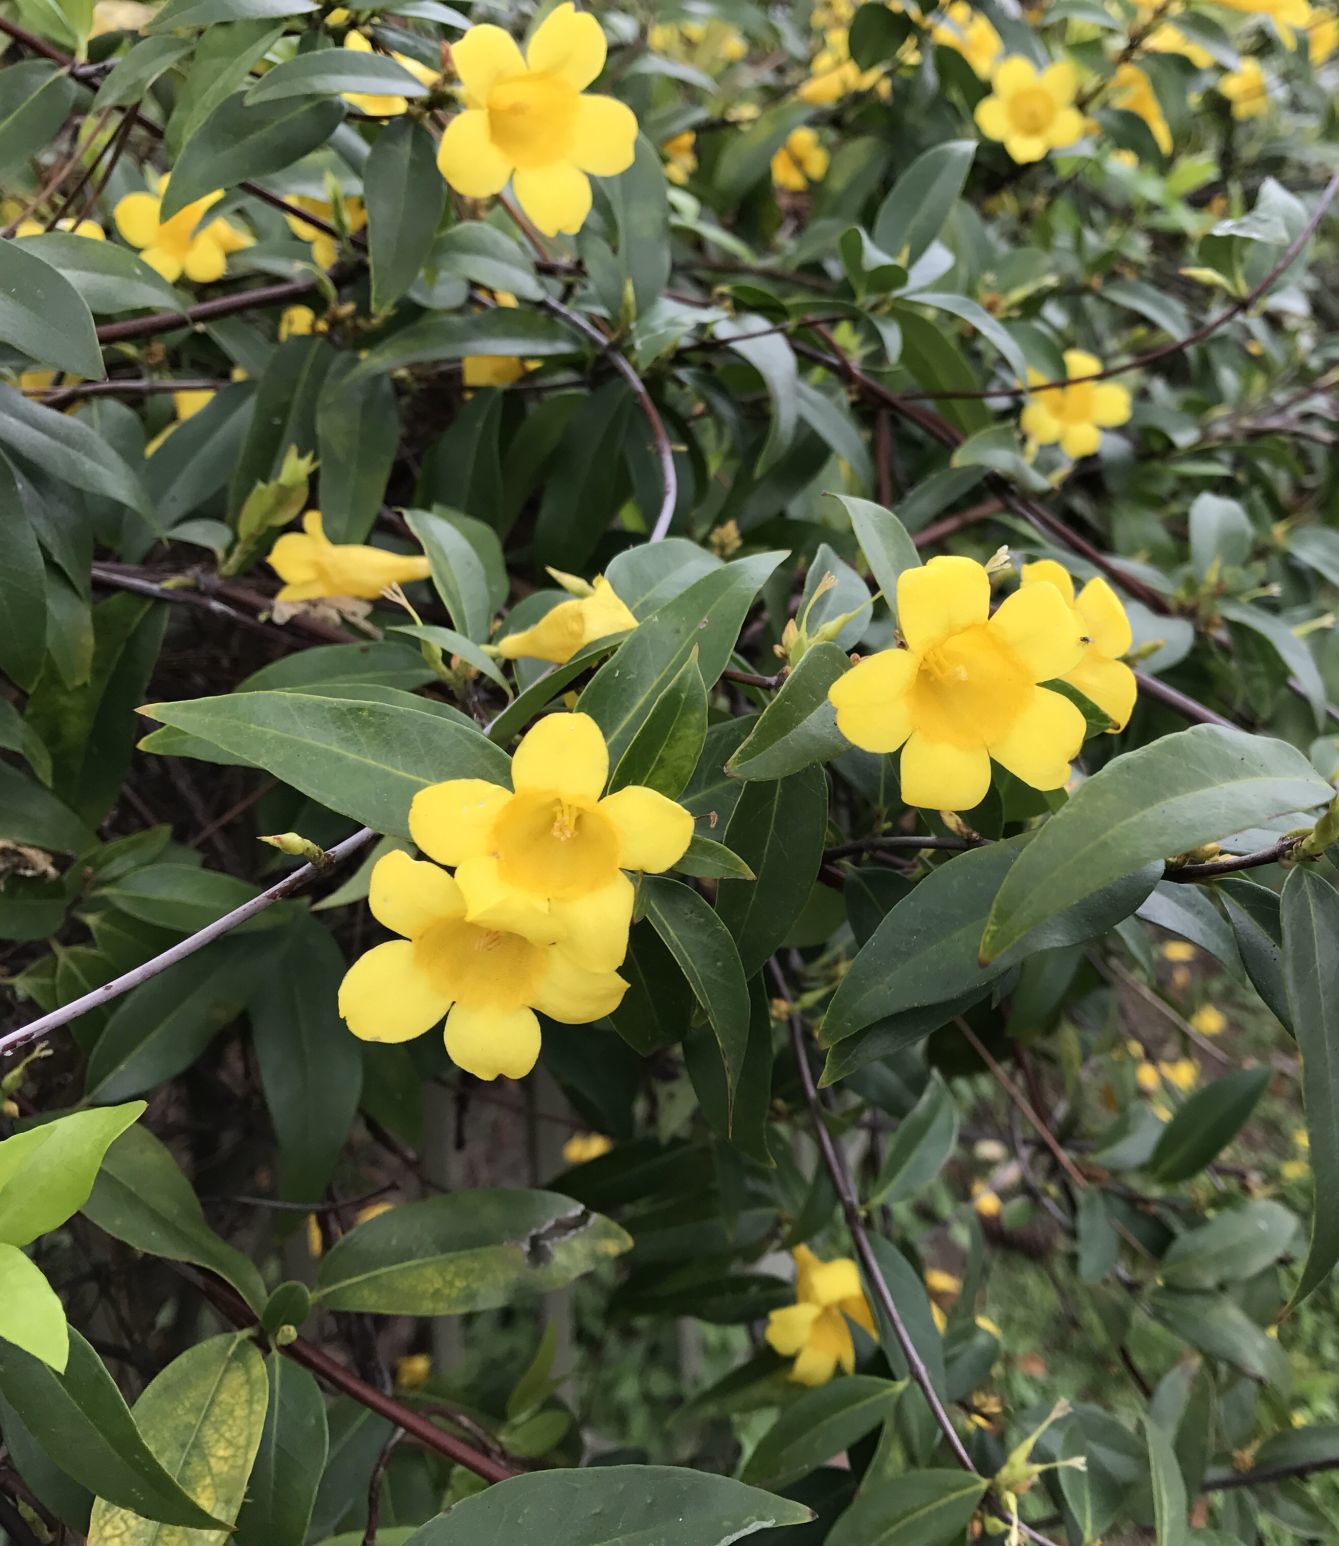 Toxic In High Doses Bright Yellow Jessamine Has Its Dark Side Home Garden Nola Com